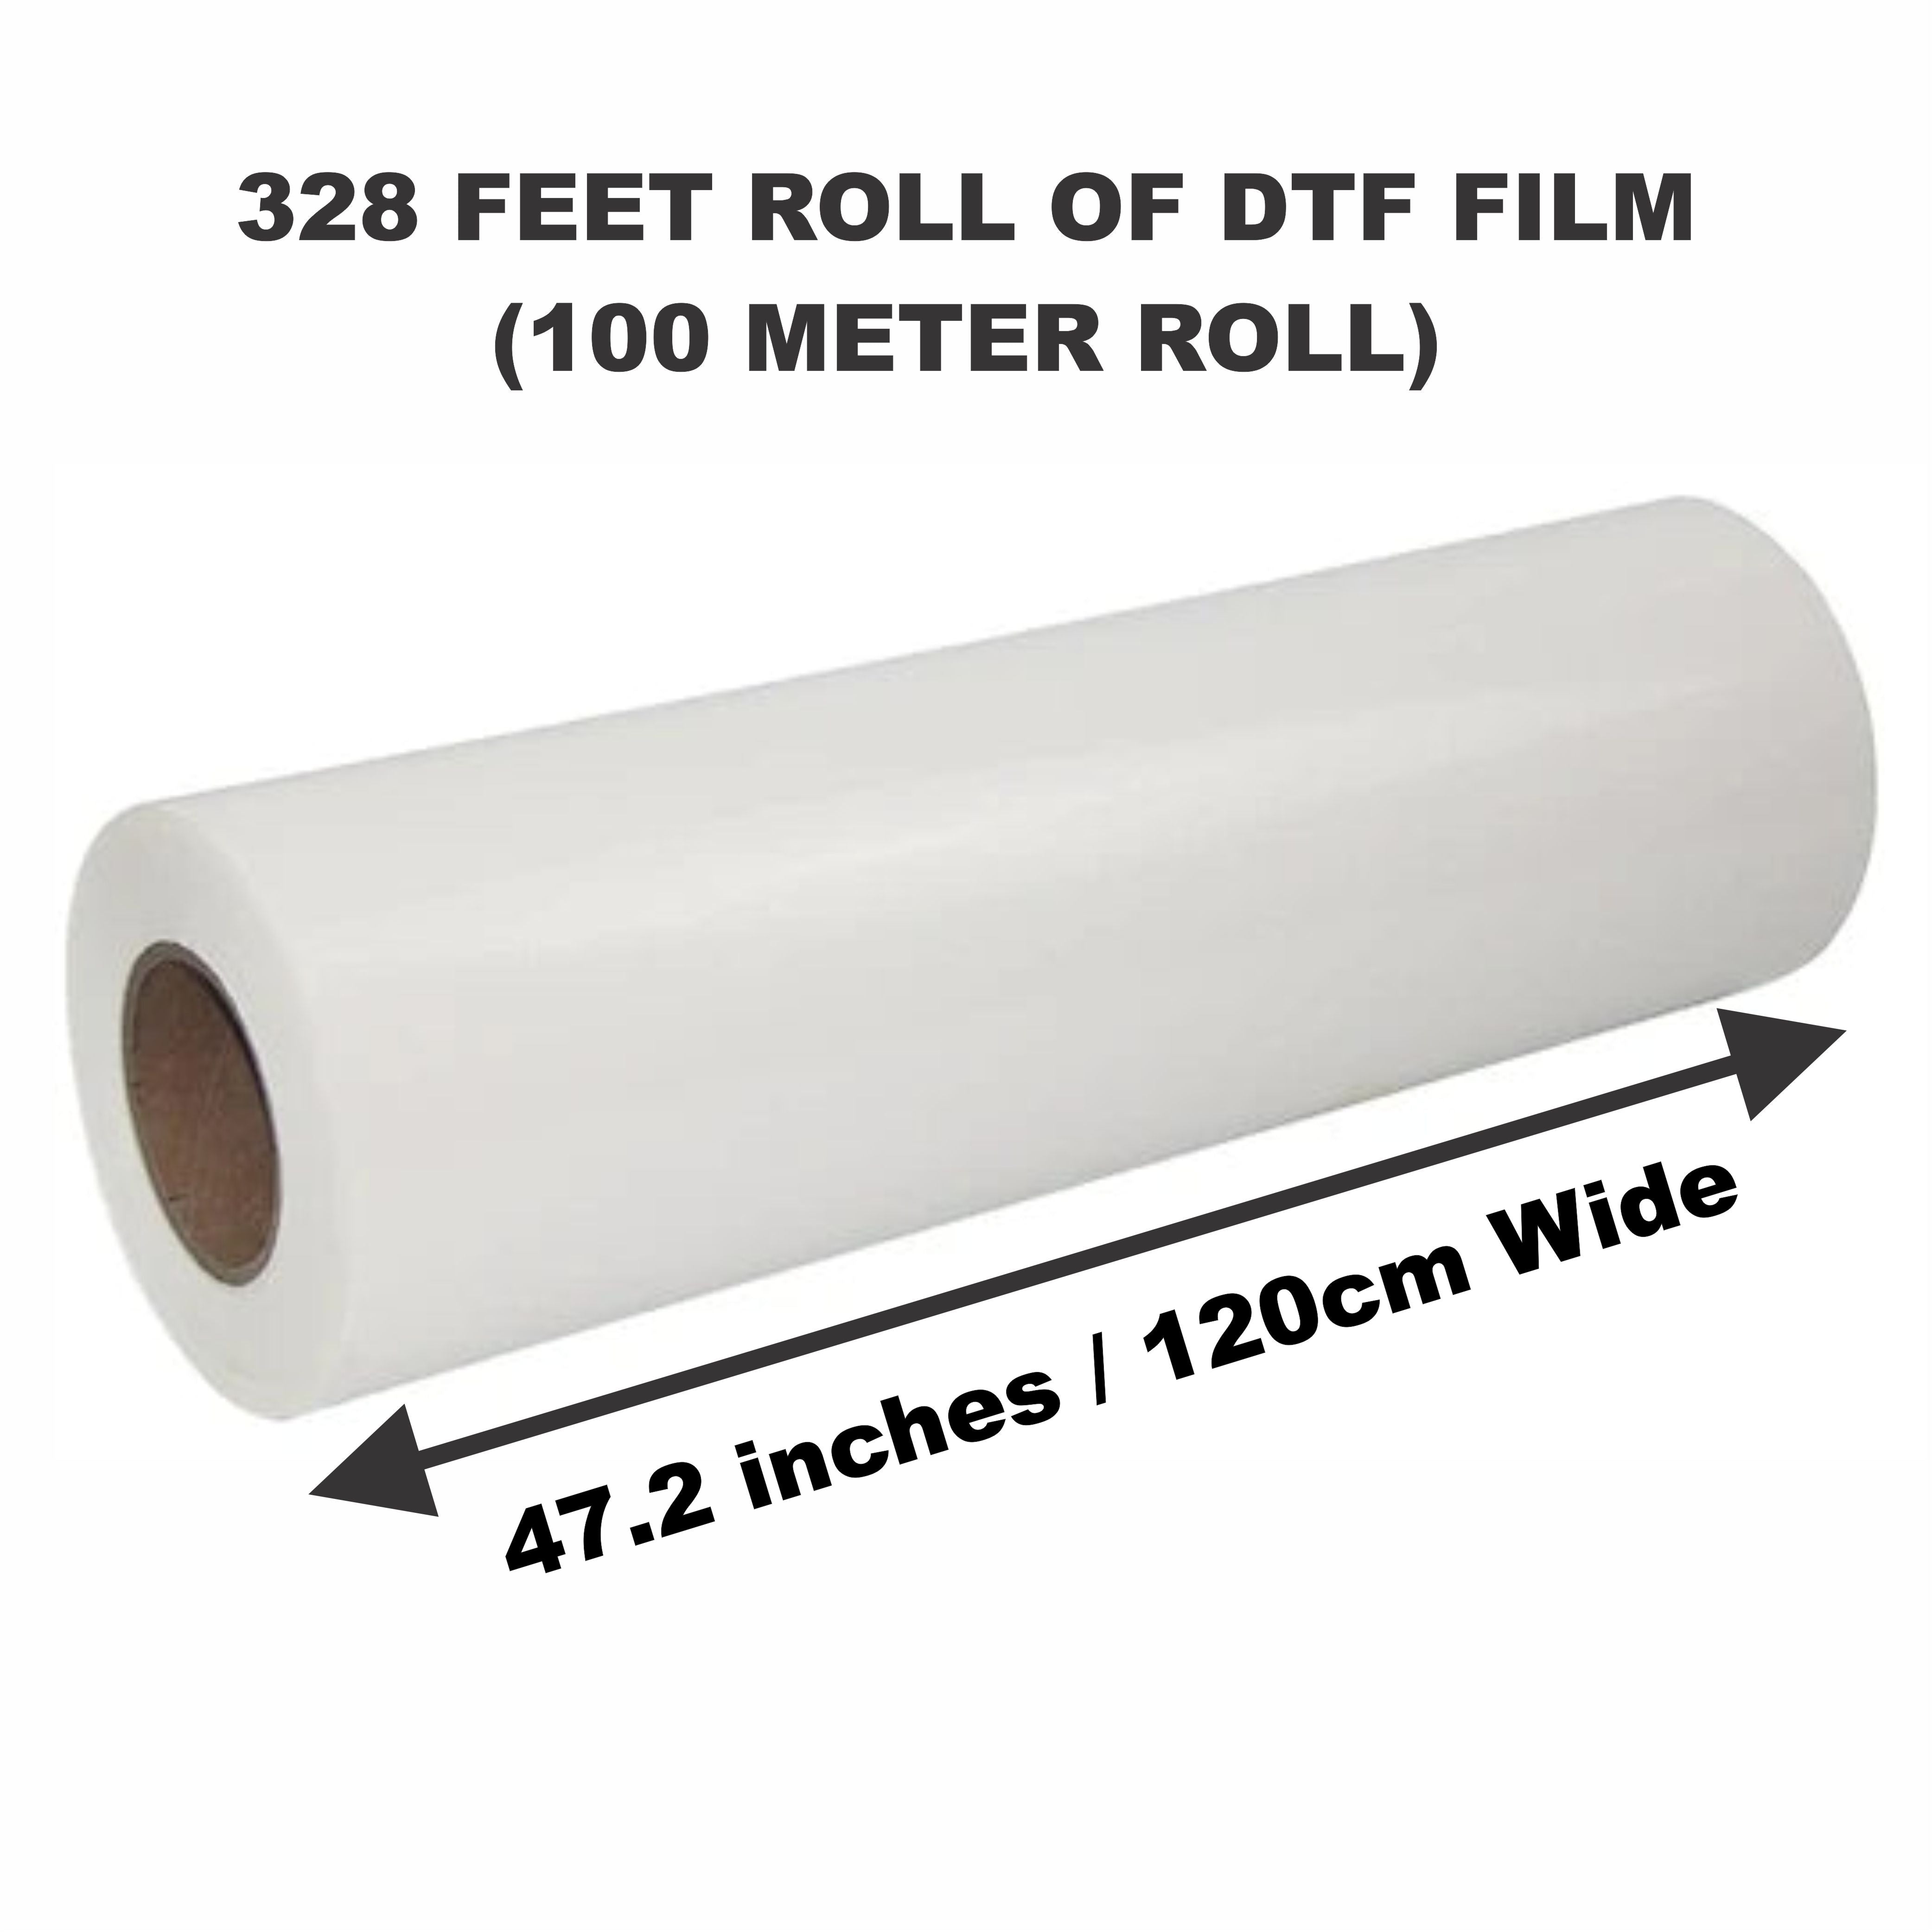 DTF roll film 60 cm x 100 m (hot peeling)